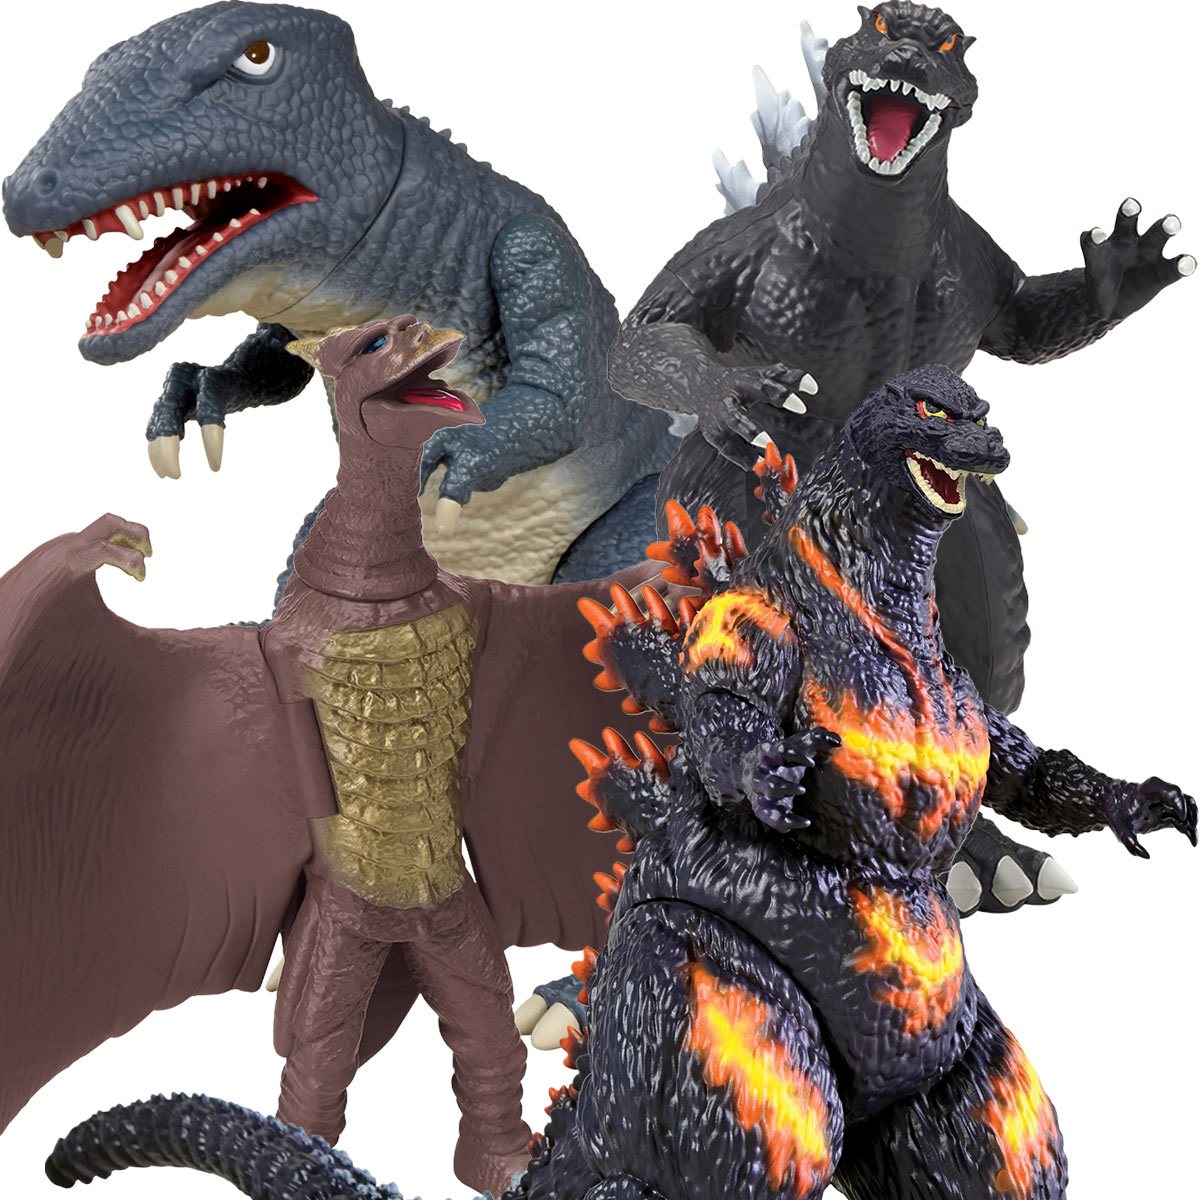 Playmates Godzilla 12 Inch 2019 Figure Final Wars 2004 for sale online